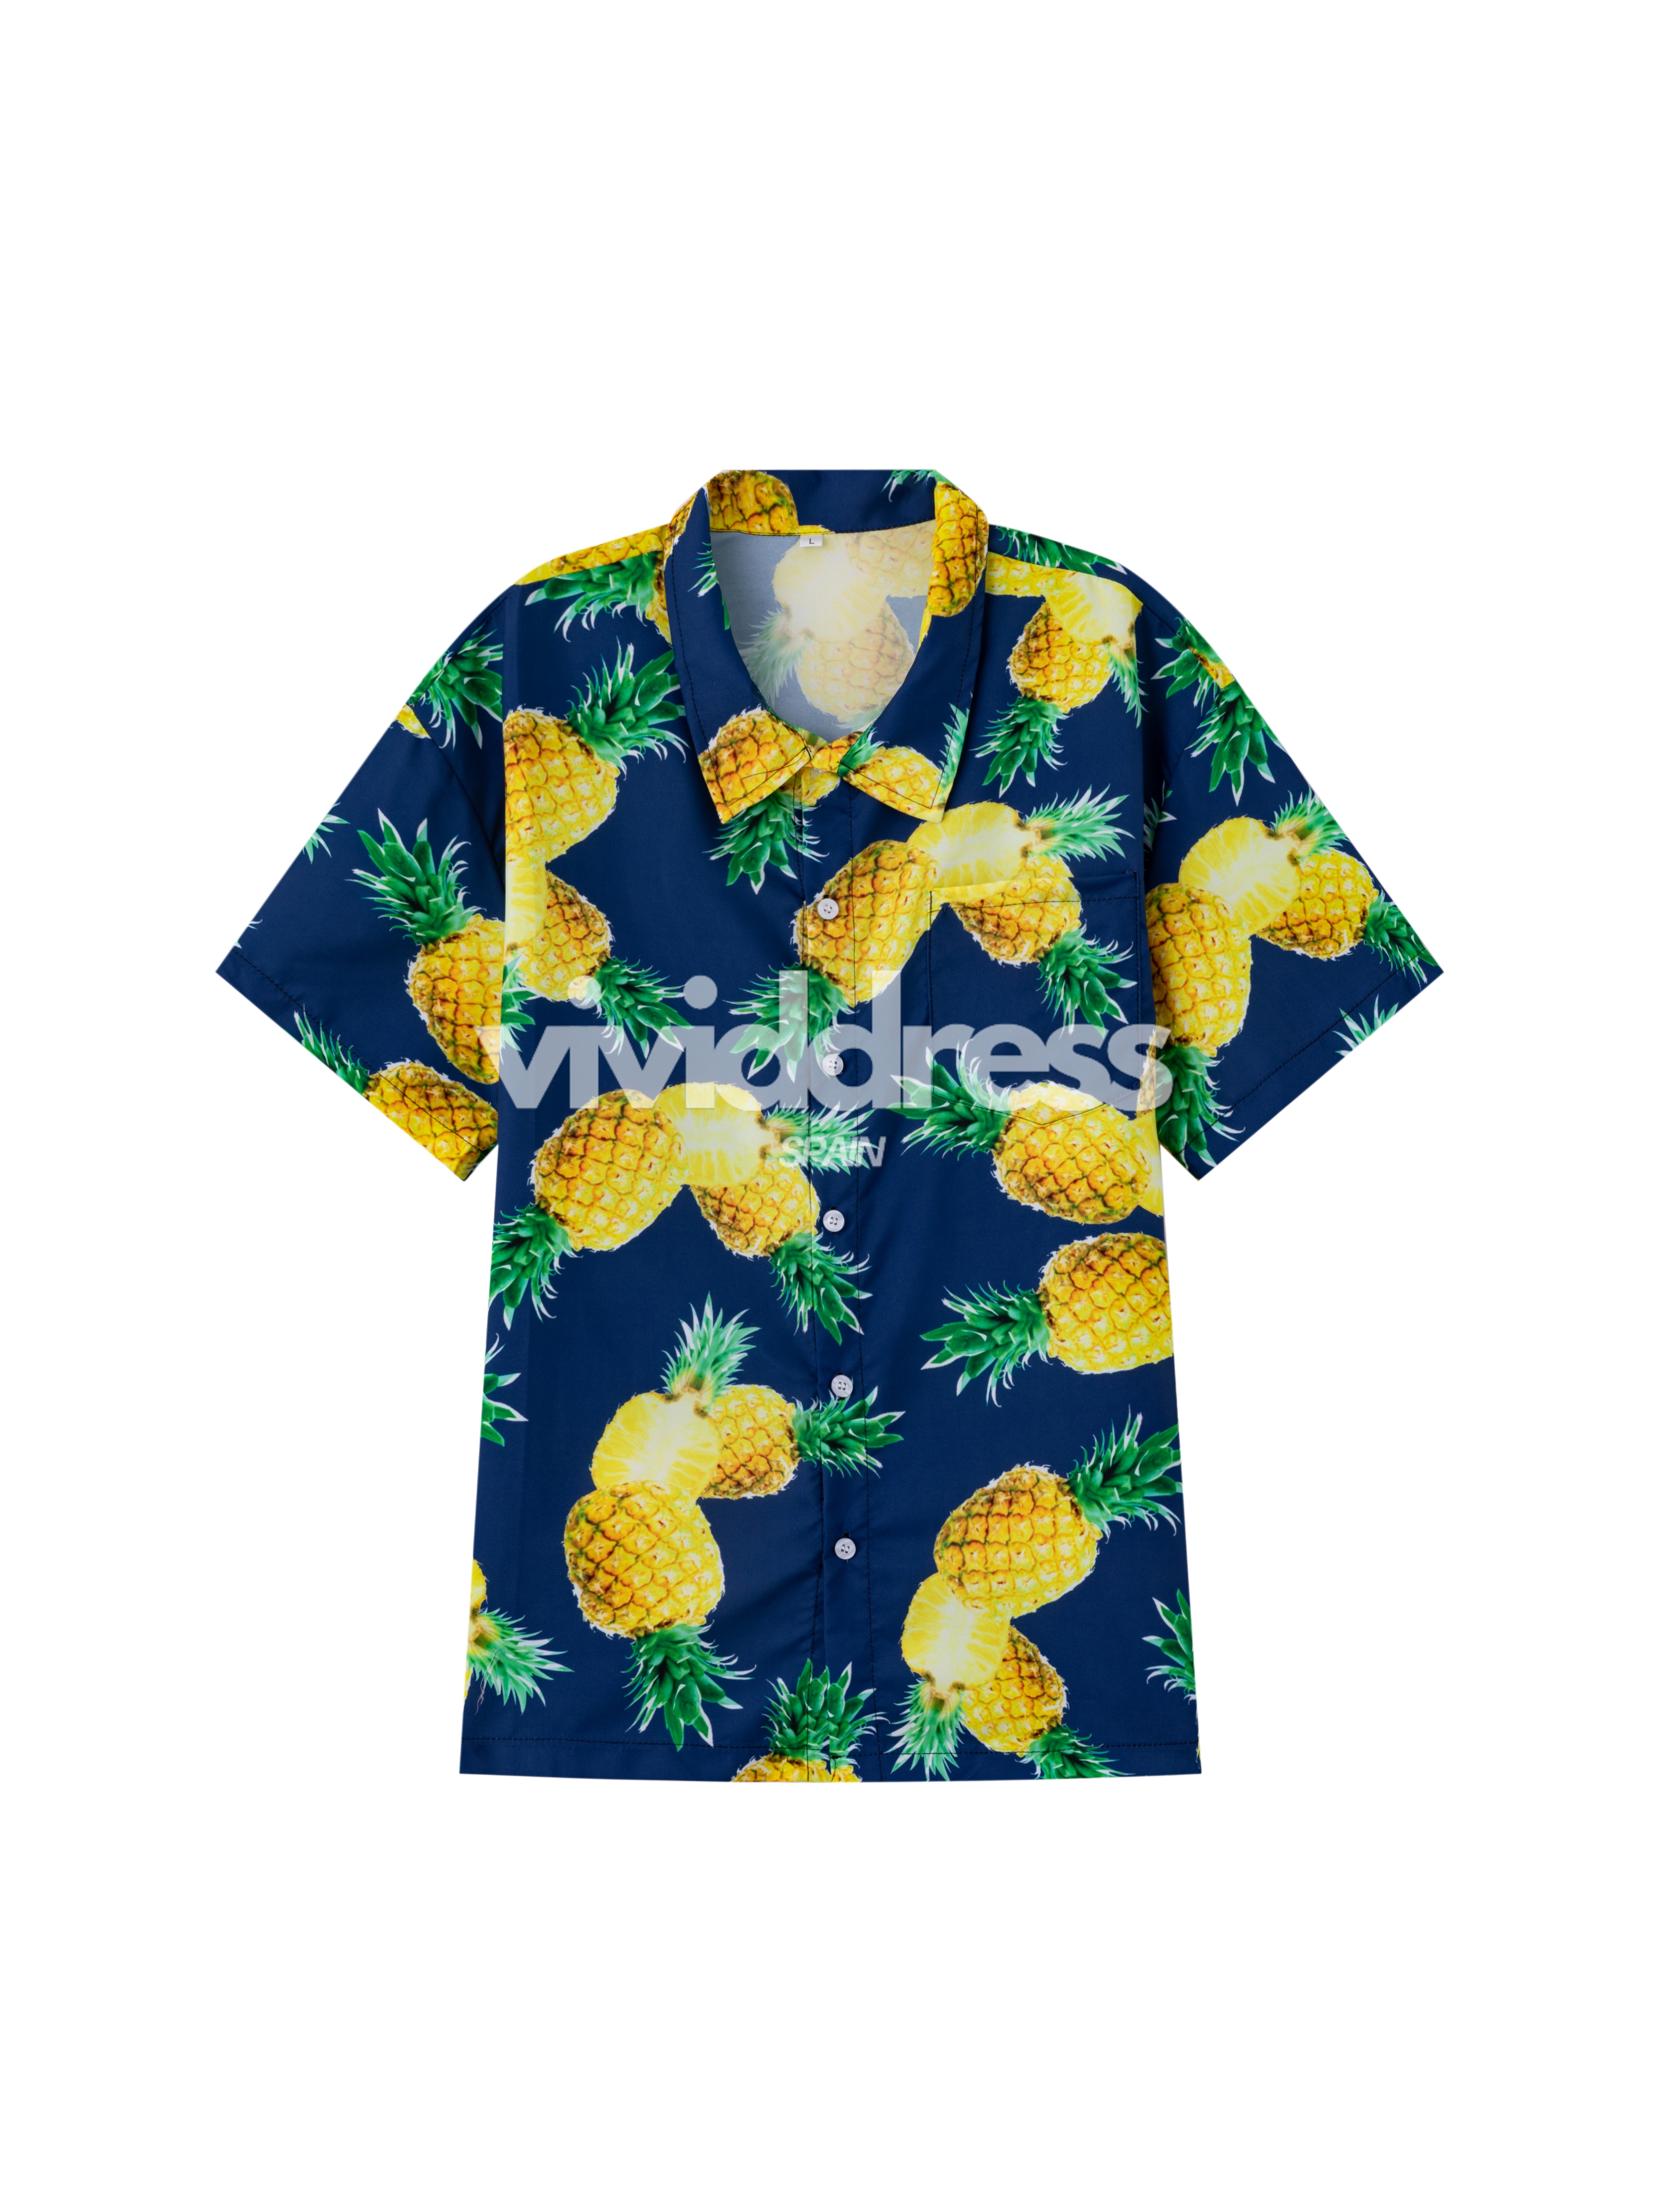 Men's Tropical Pineapple Print Beach Summer Holiday Short Sleeve Shirt